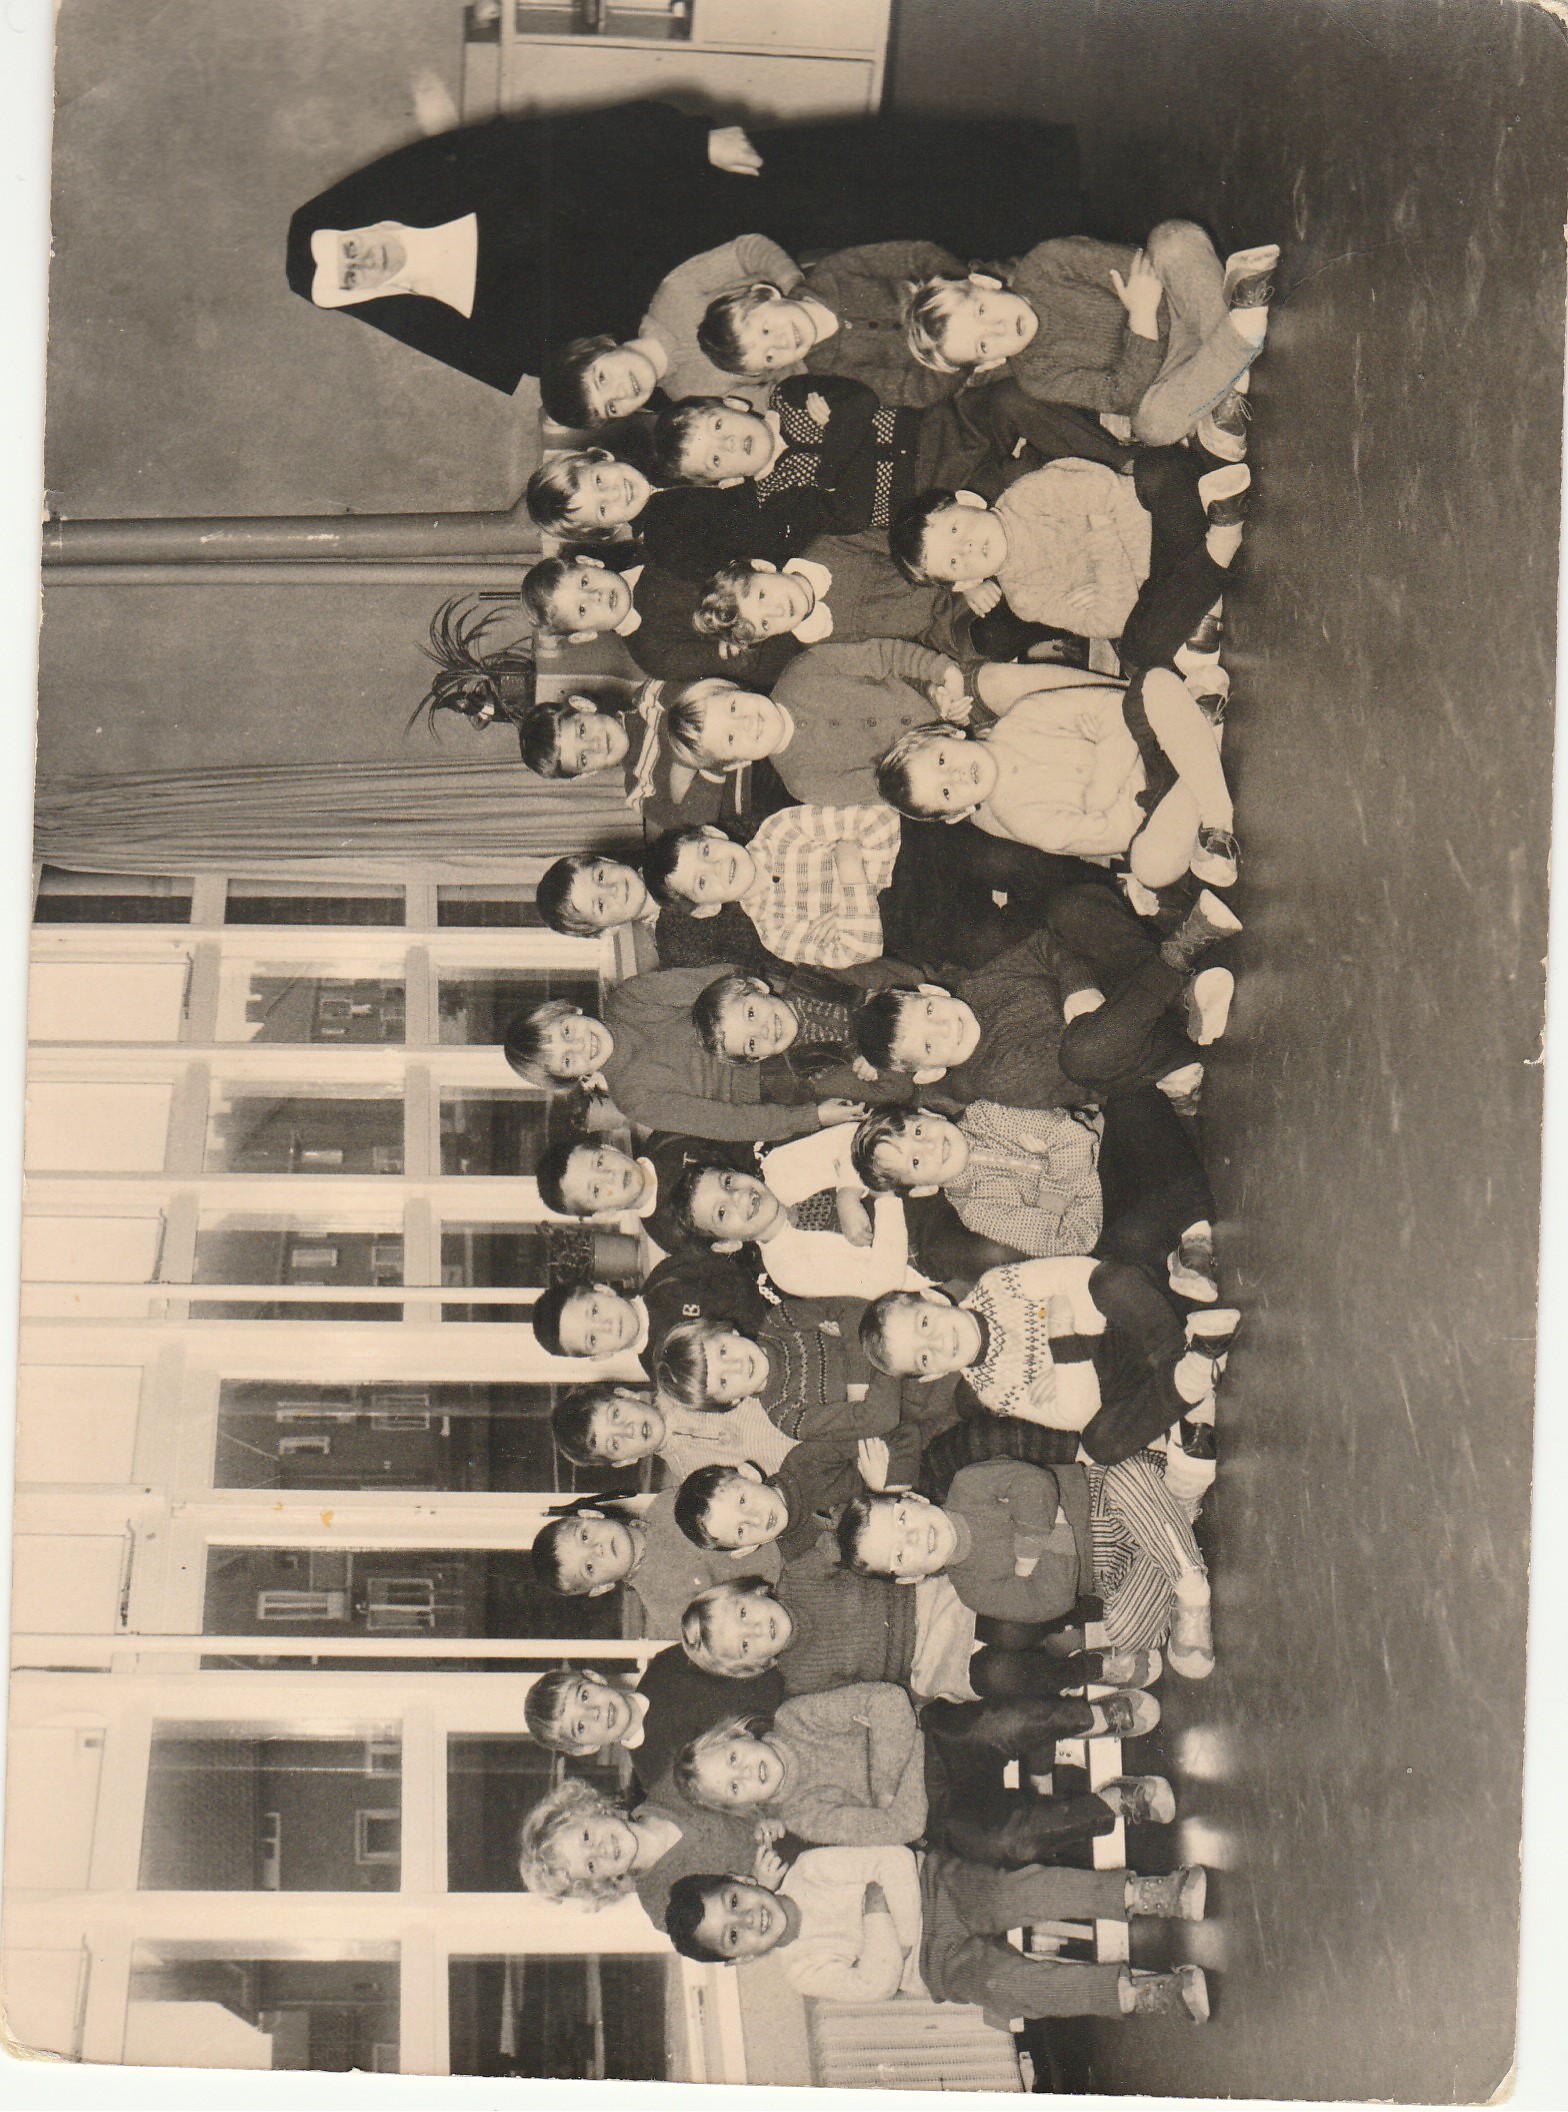 R.K. kleuterschool Agatha foto